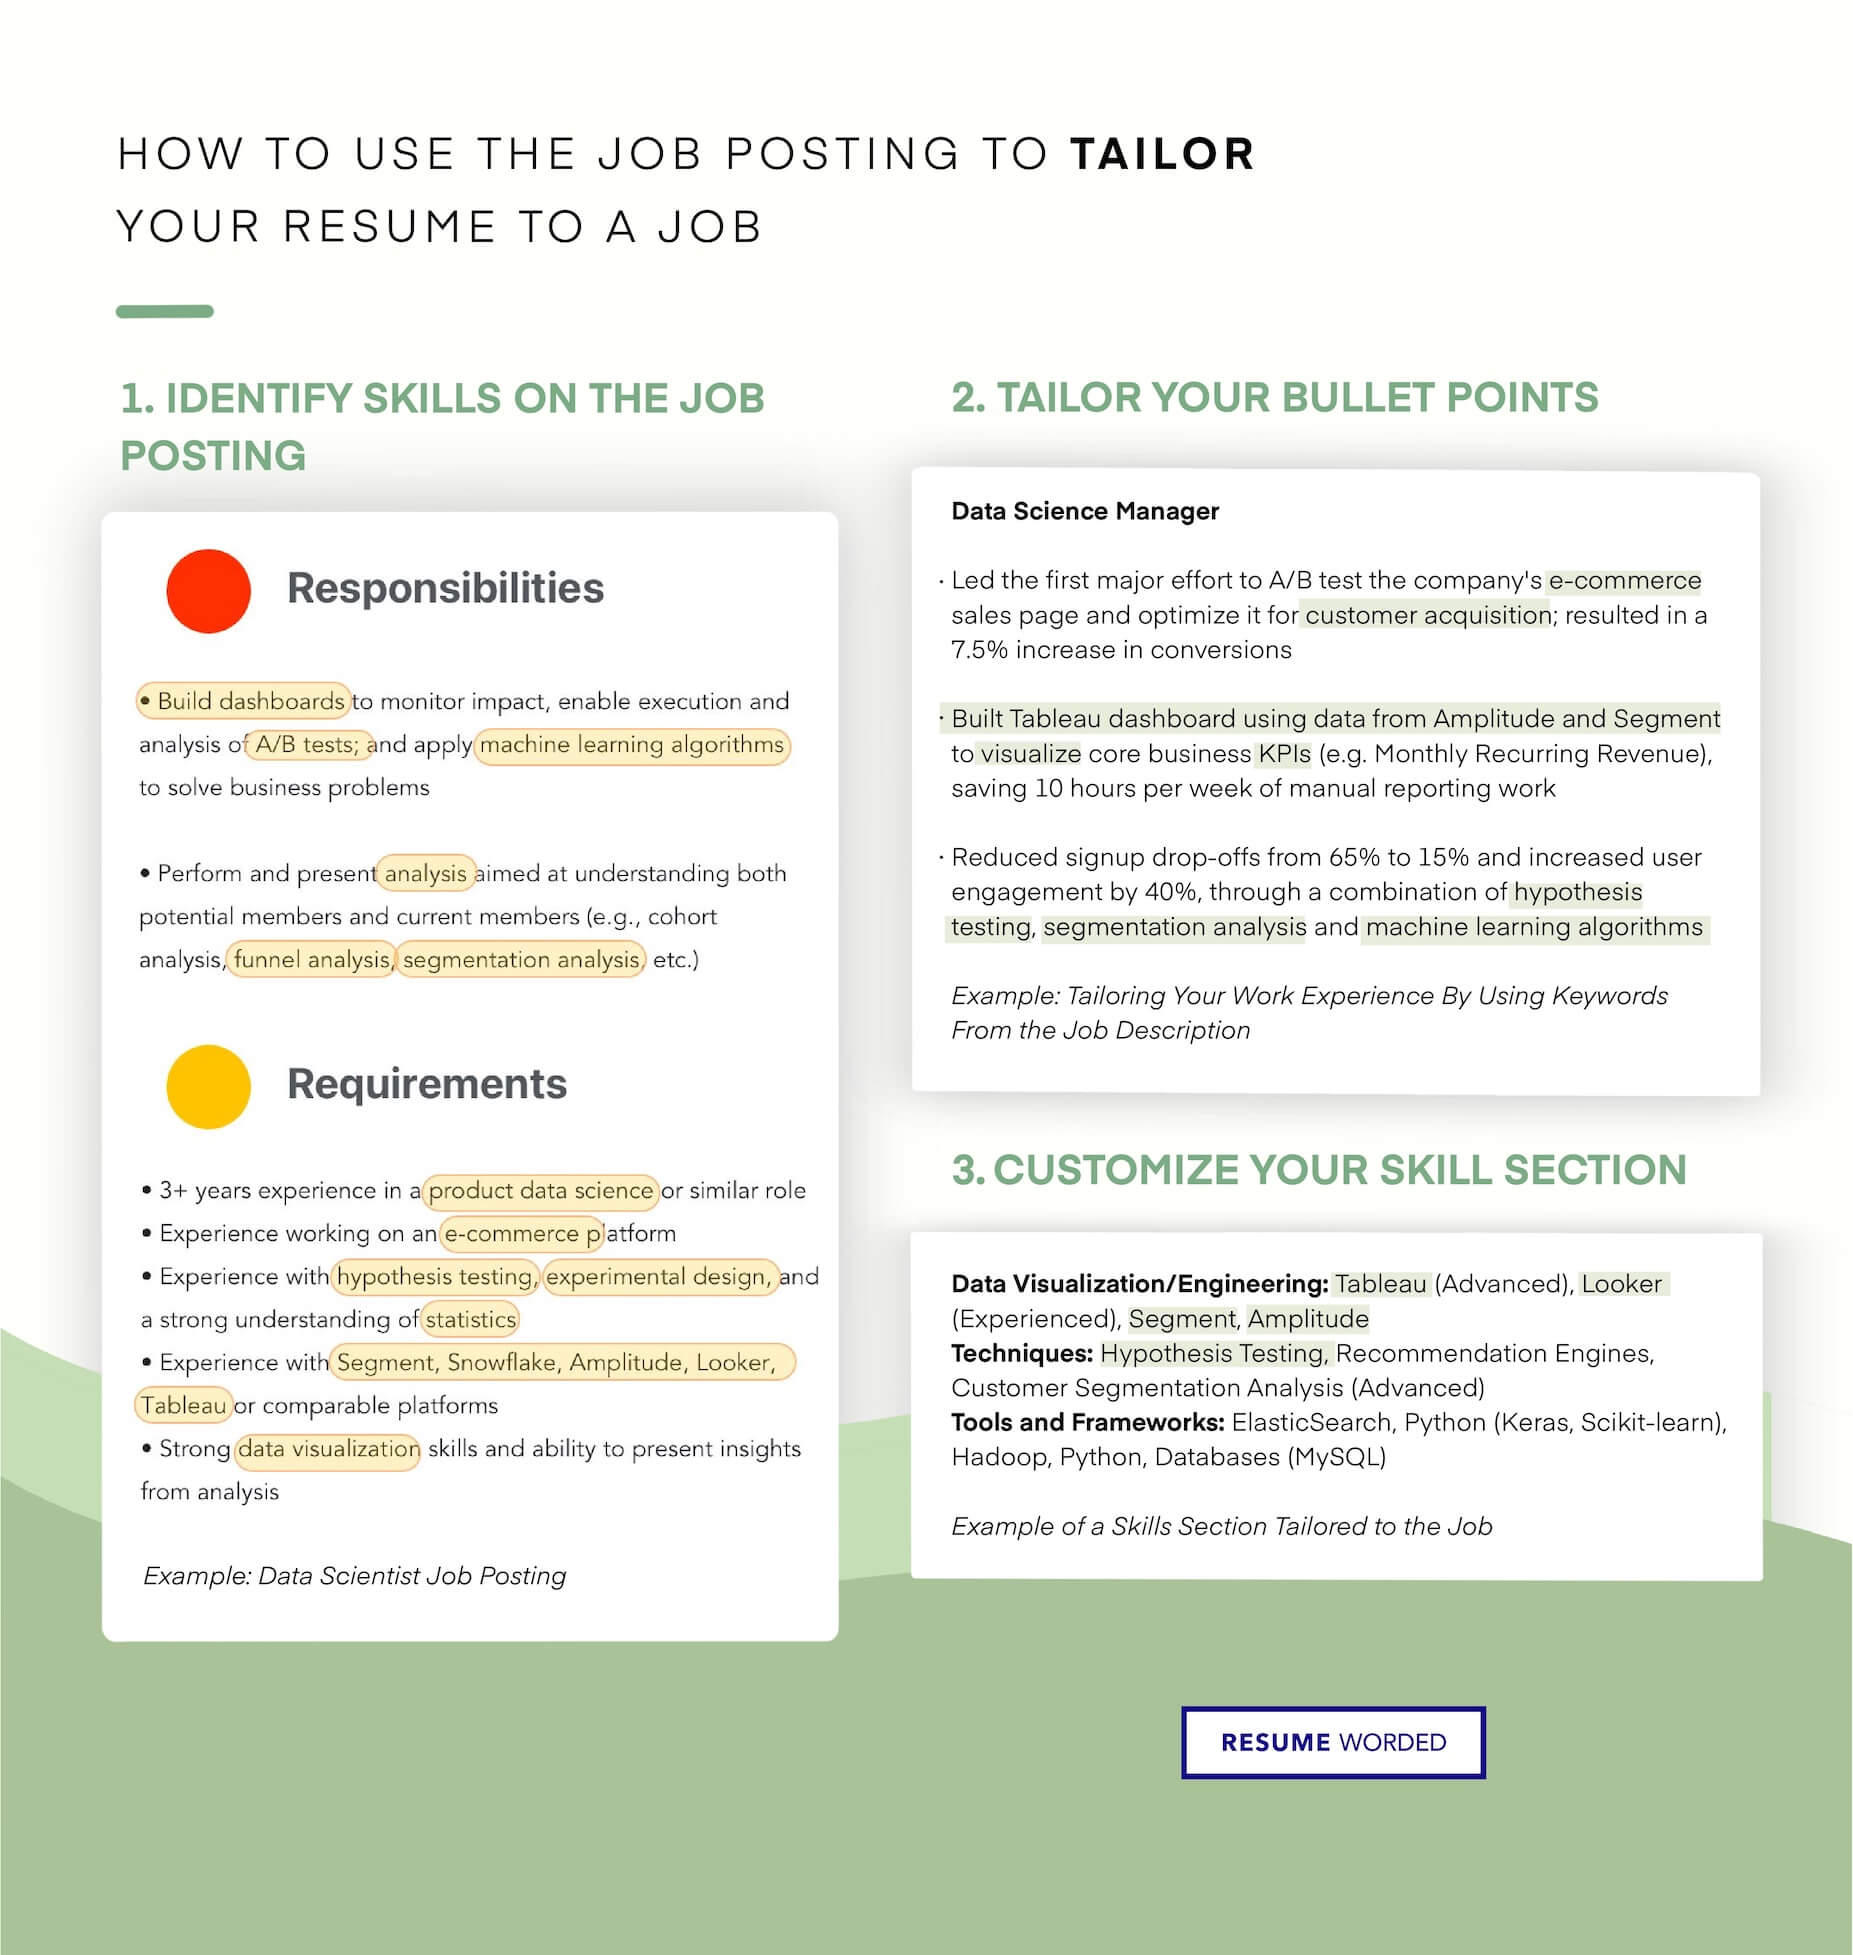 Focus on relevant technical skills - Network Administrator Resume